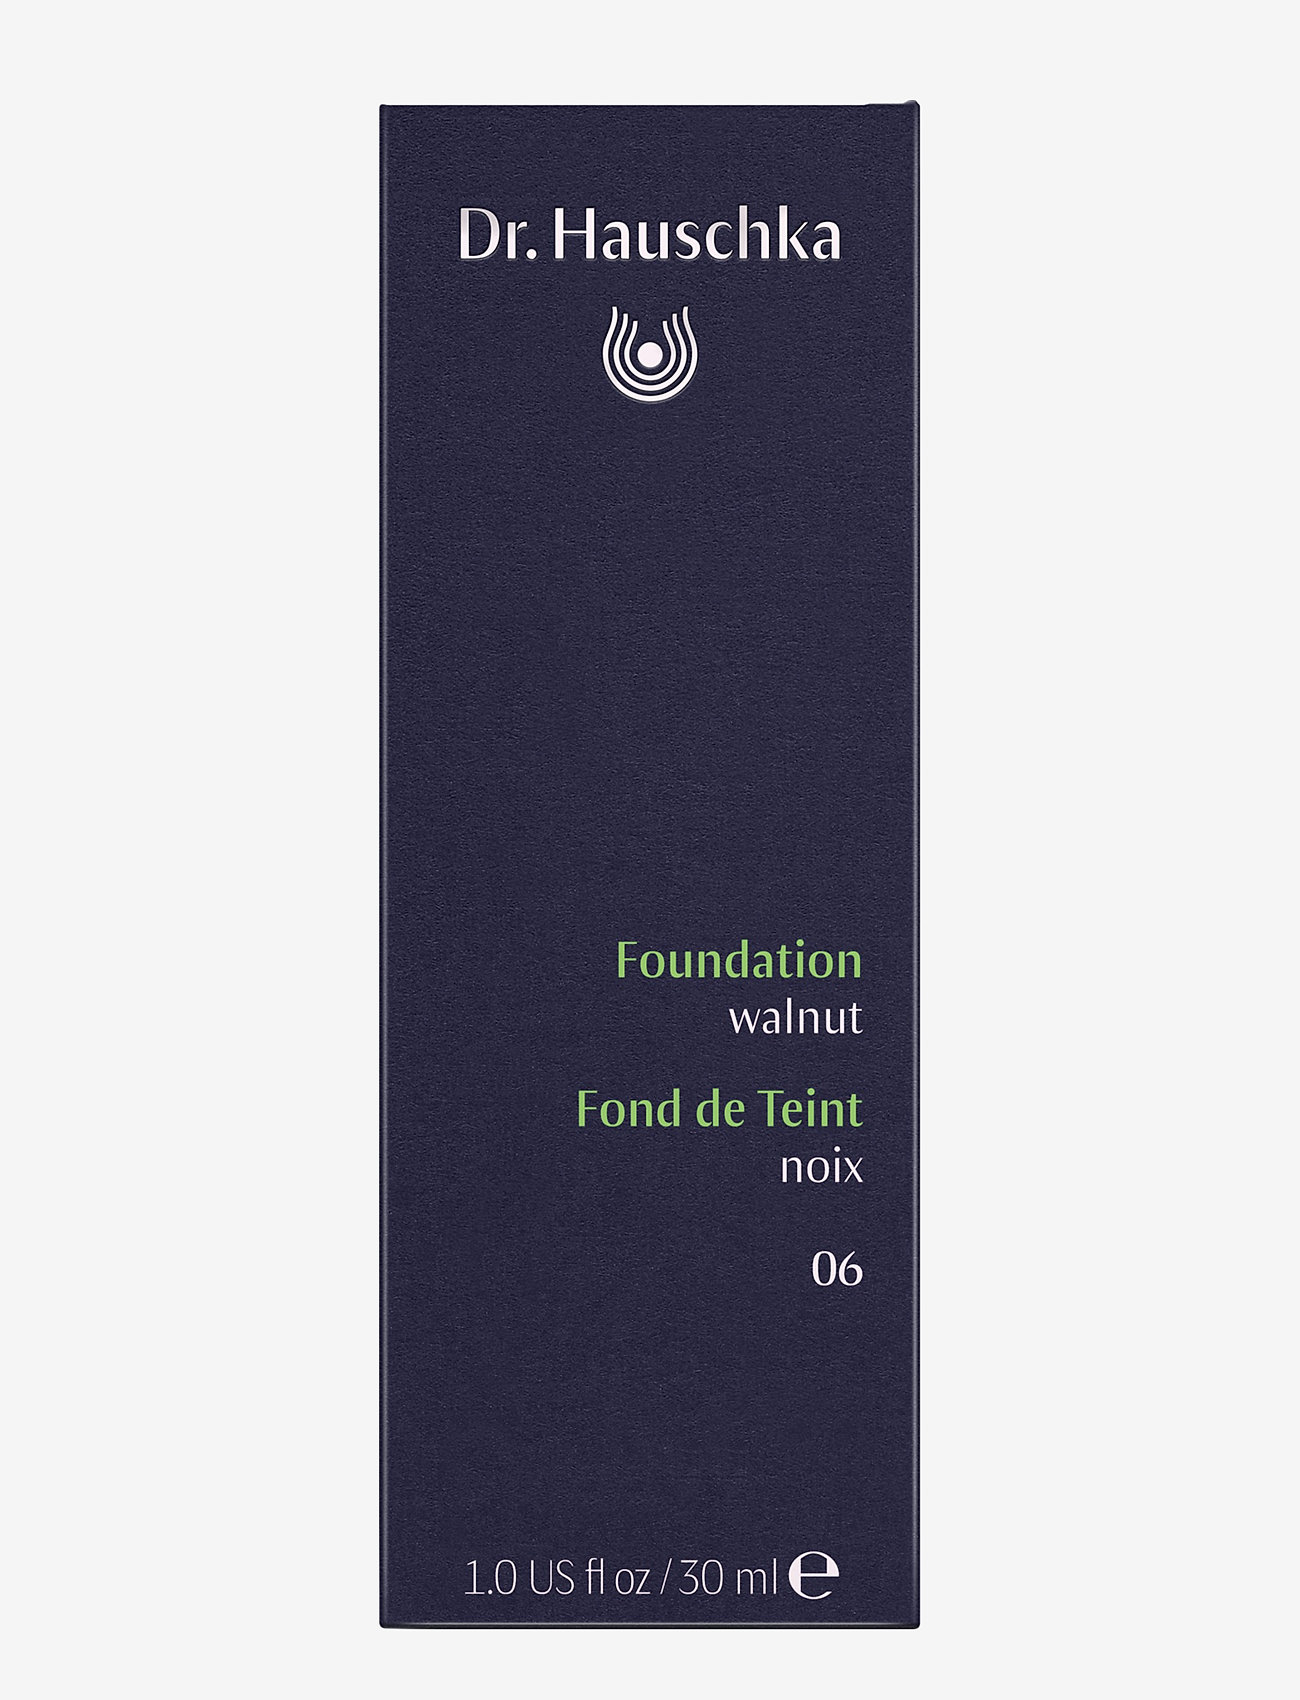 Dr. Hauschka - FOUNDATION - 06 walnut - 1